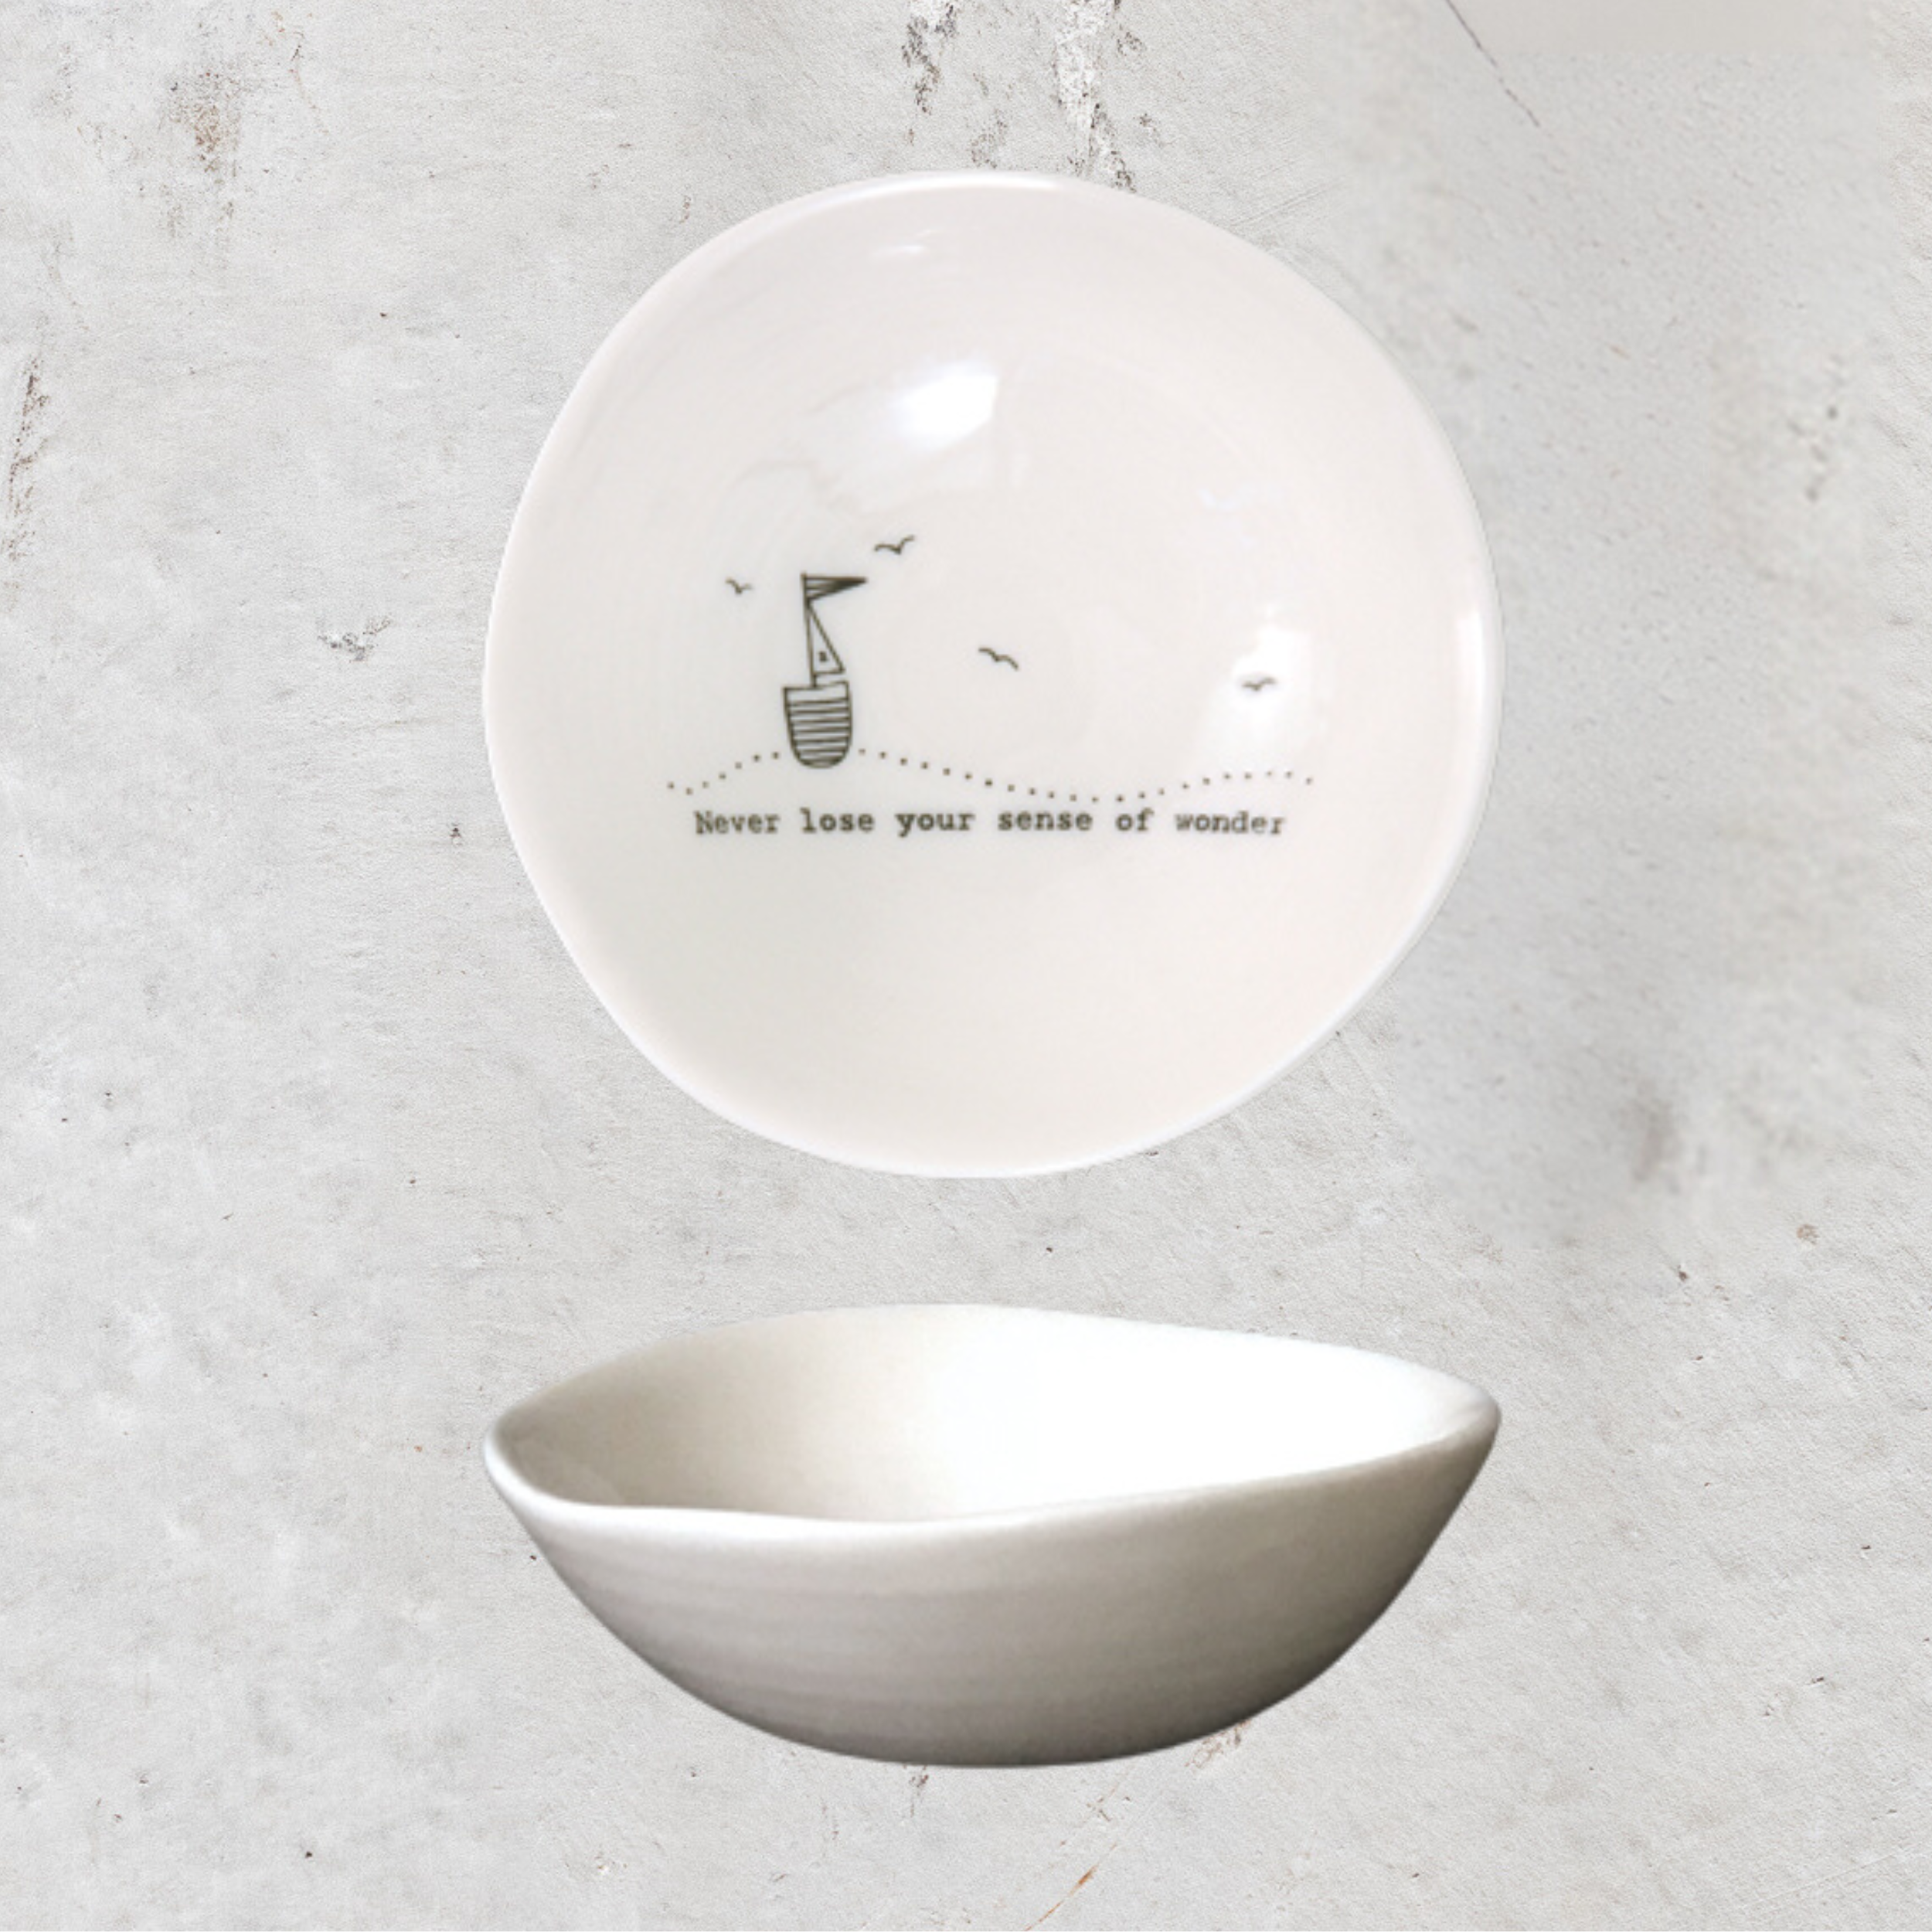 Wobbly porcelain bowls - small